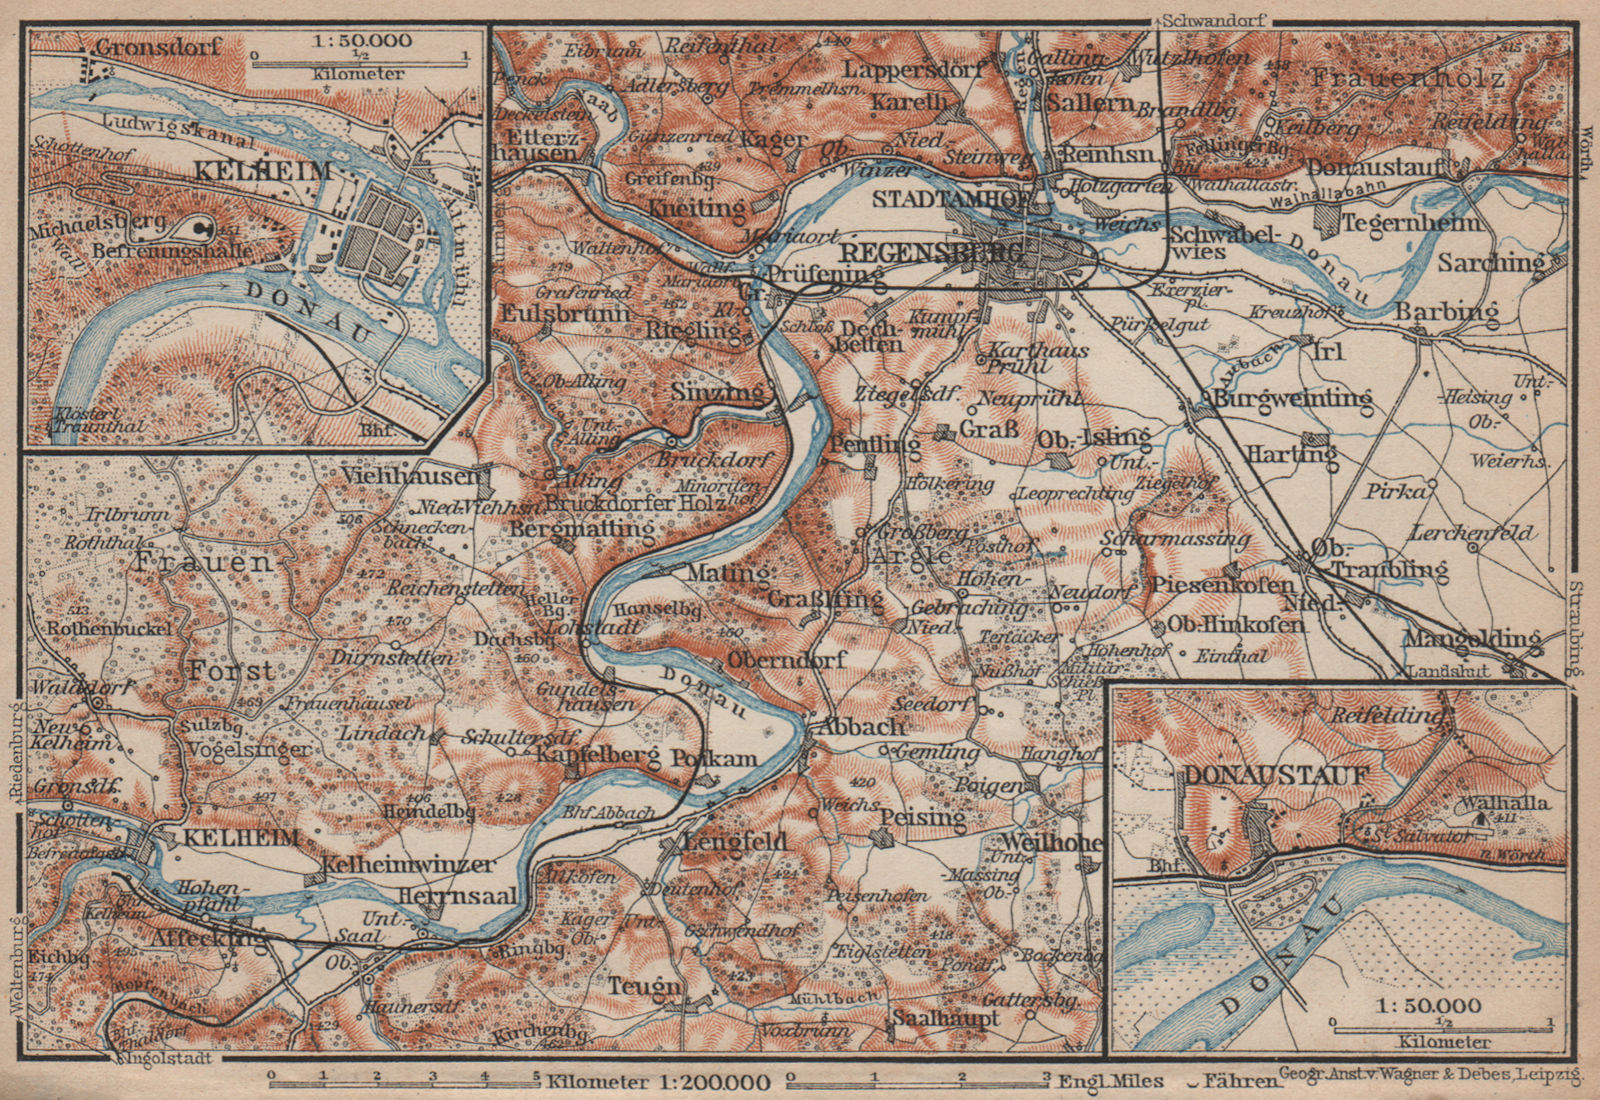 REGENSBURG & environs/umgebung. Kelheim Donaustauf. Ratisbon. Bavaria 1902 map